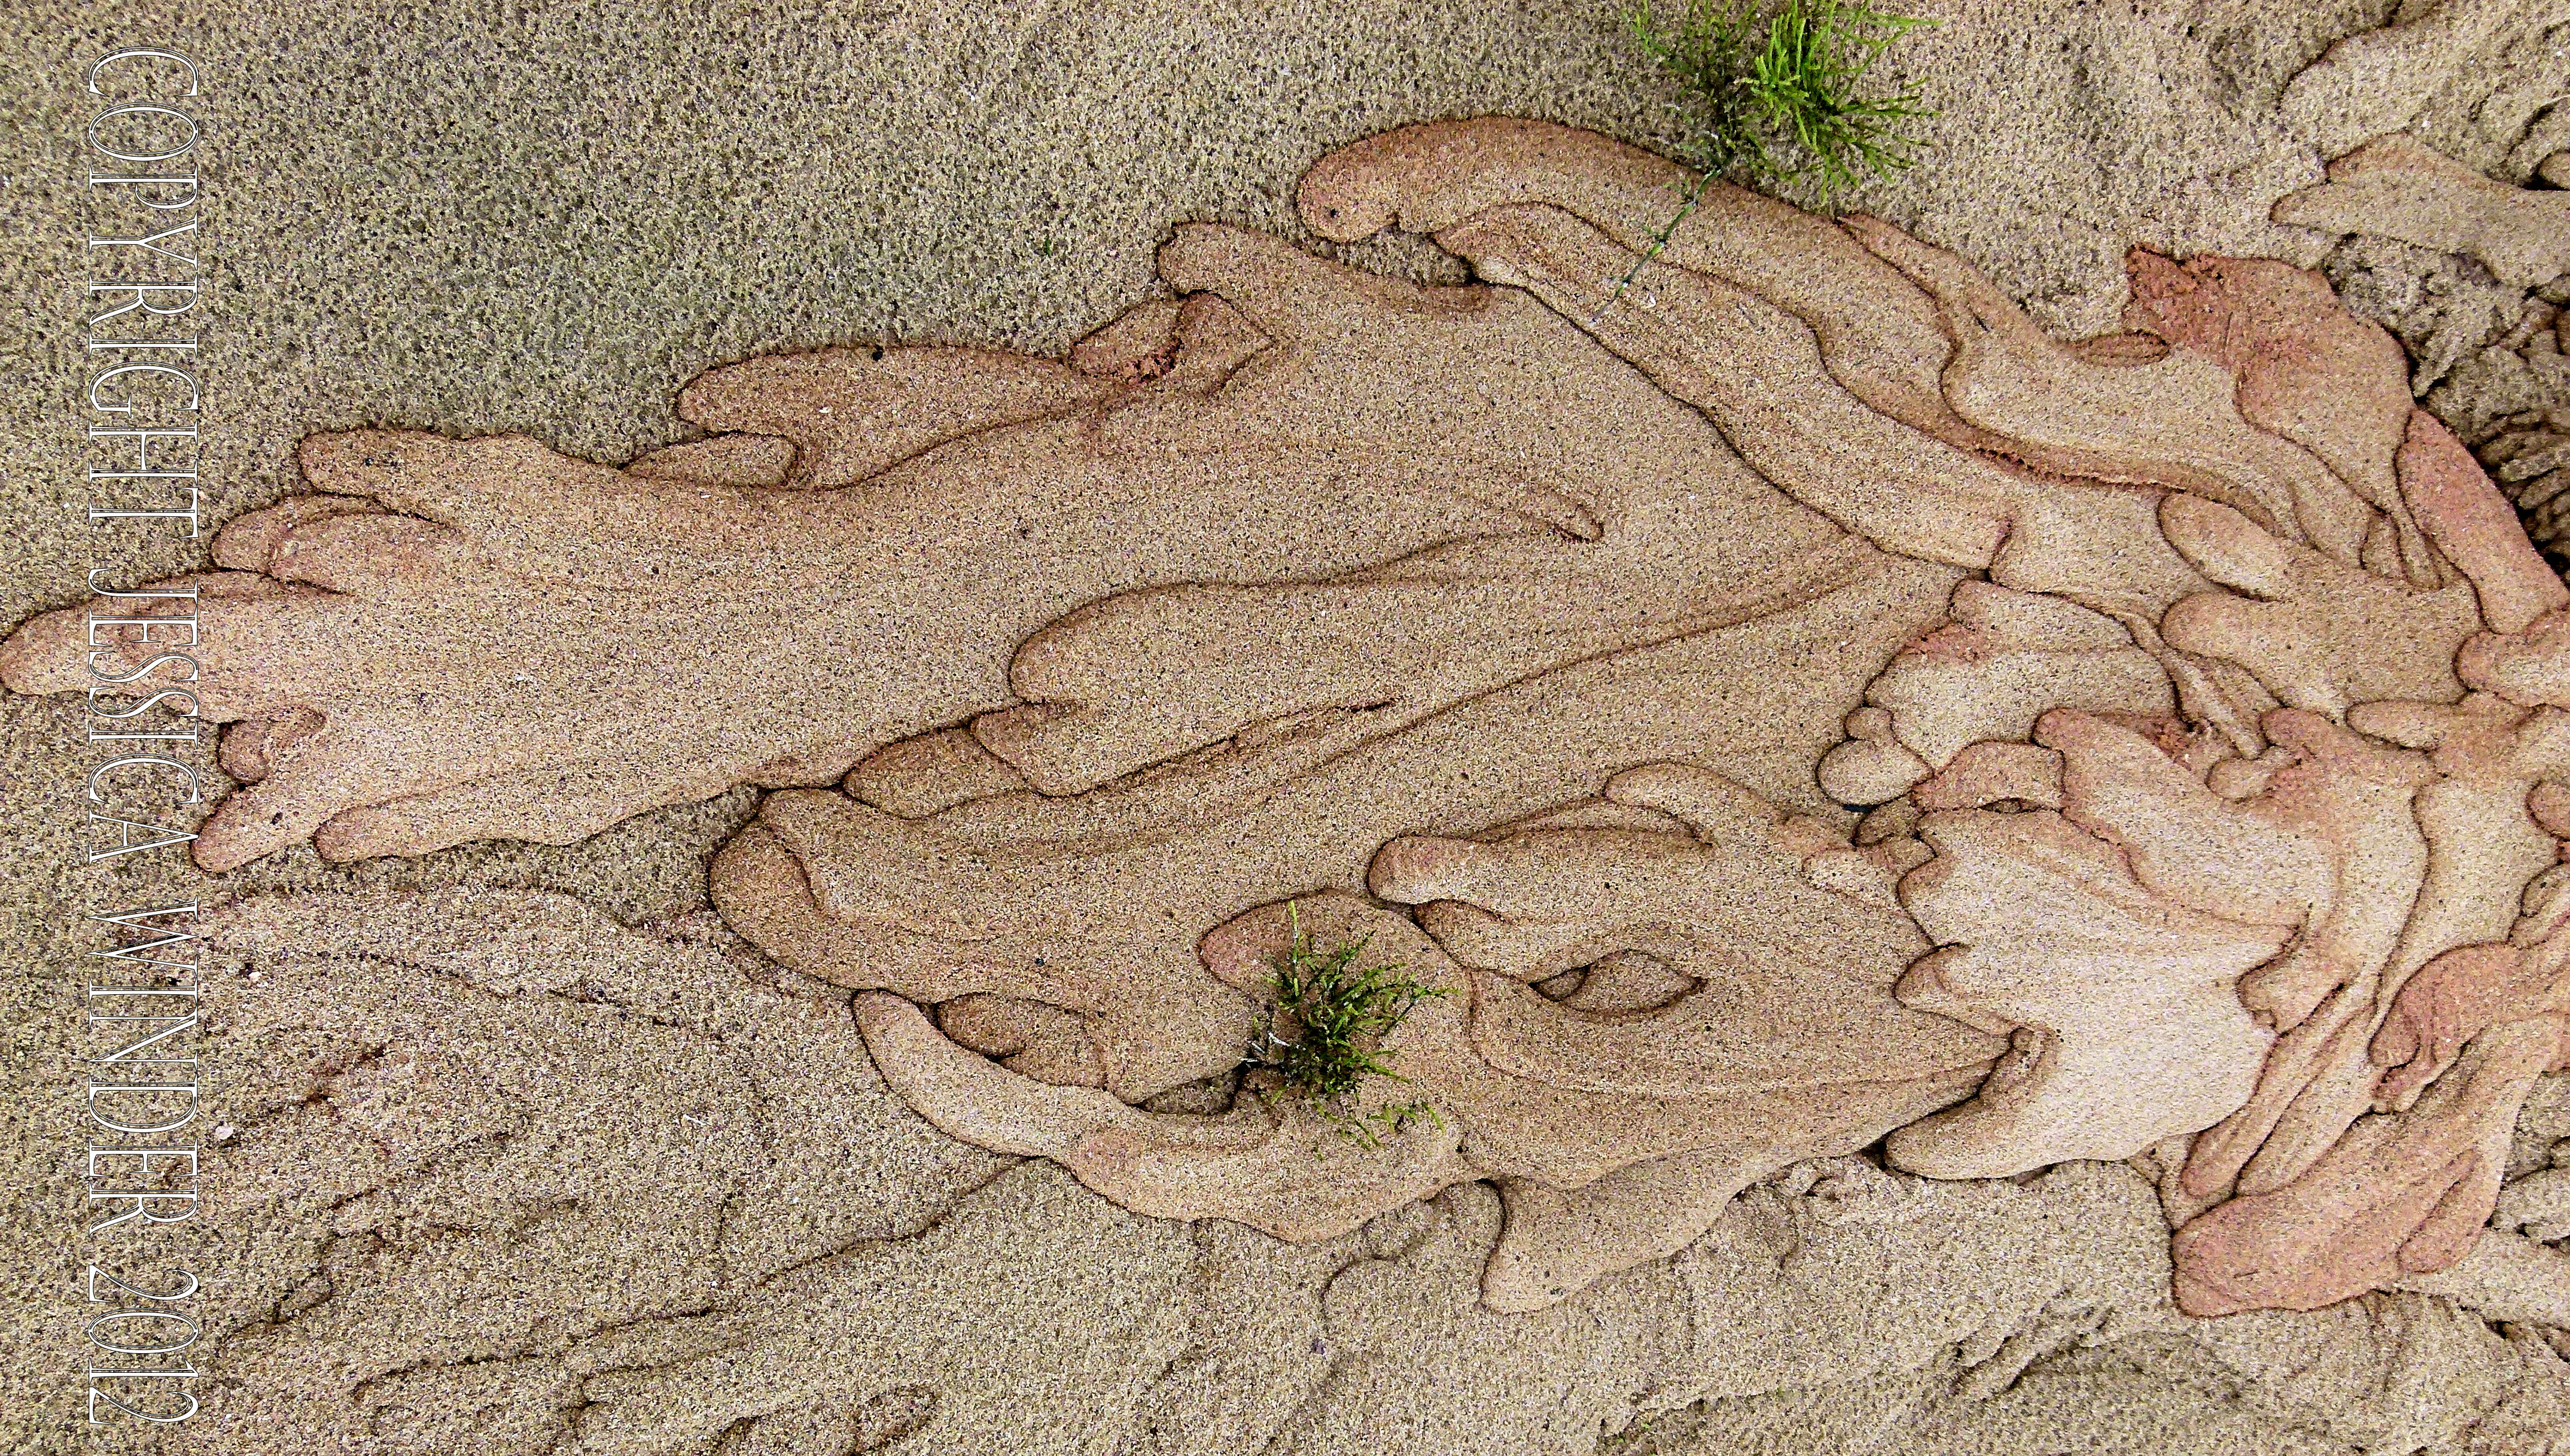 Sand Patterns 5 | Photographic Salmagundi